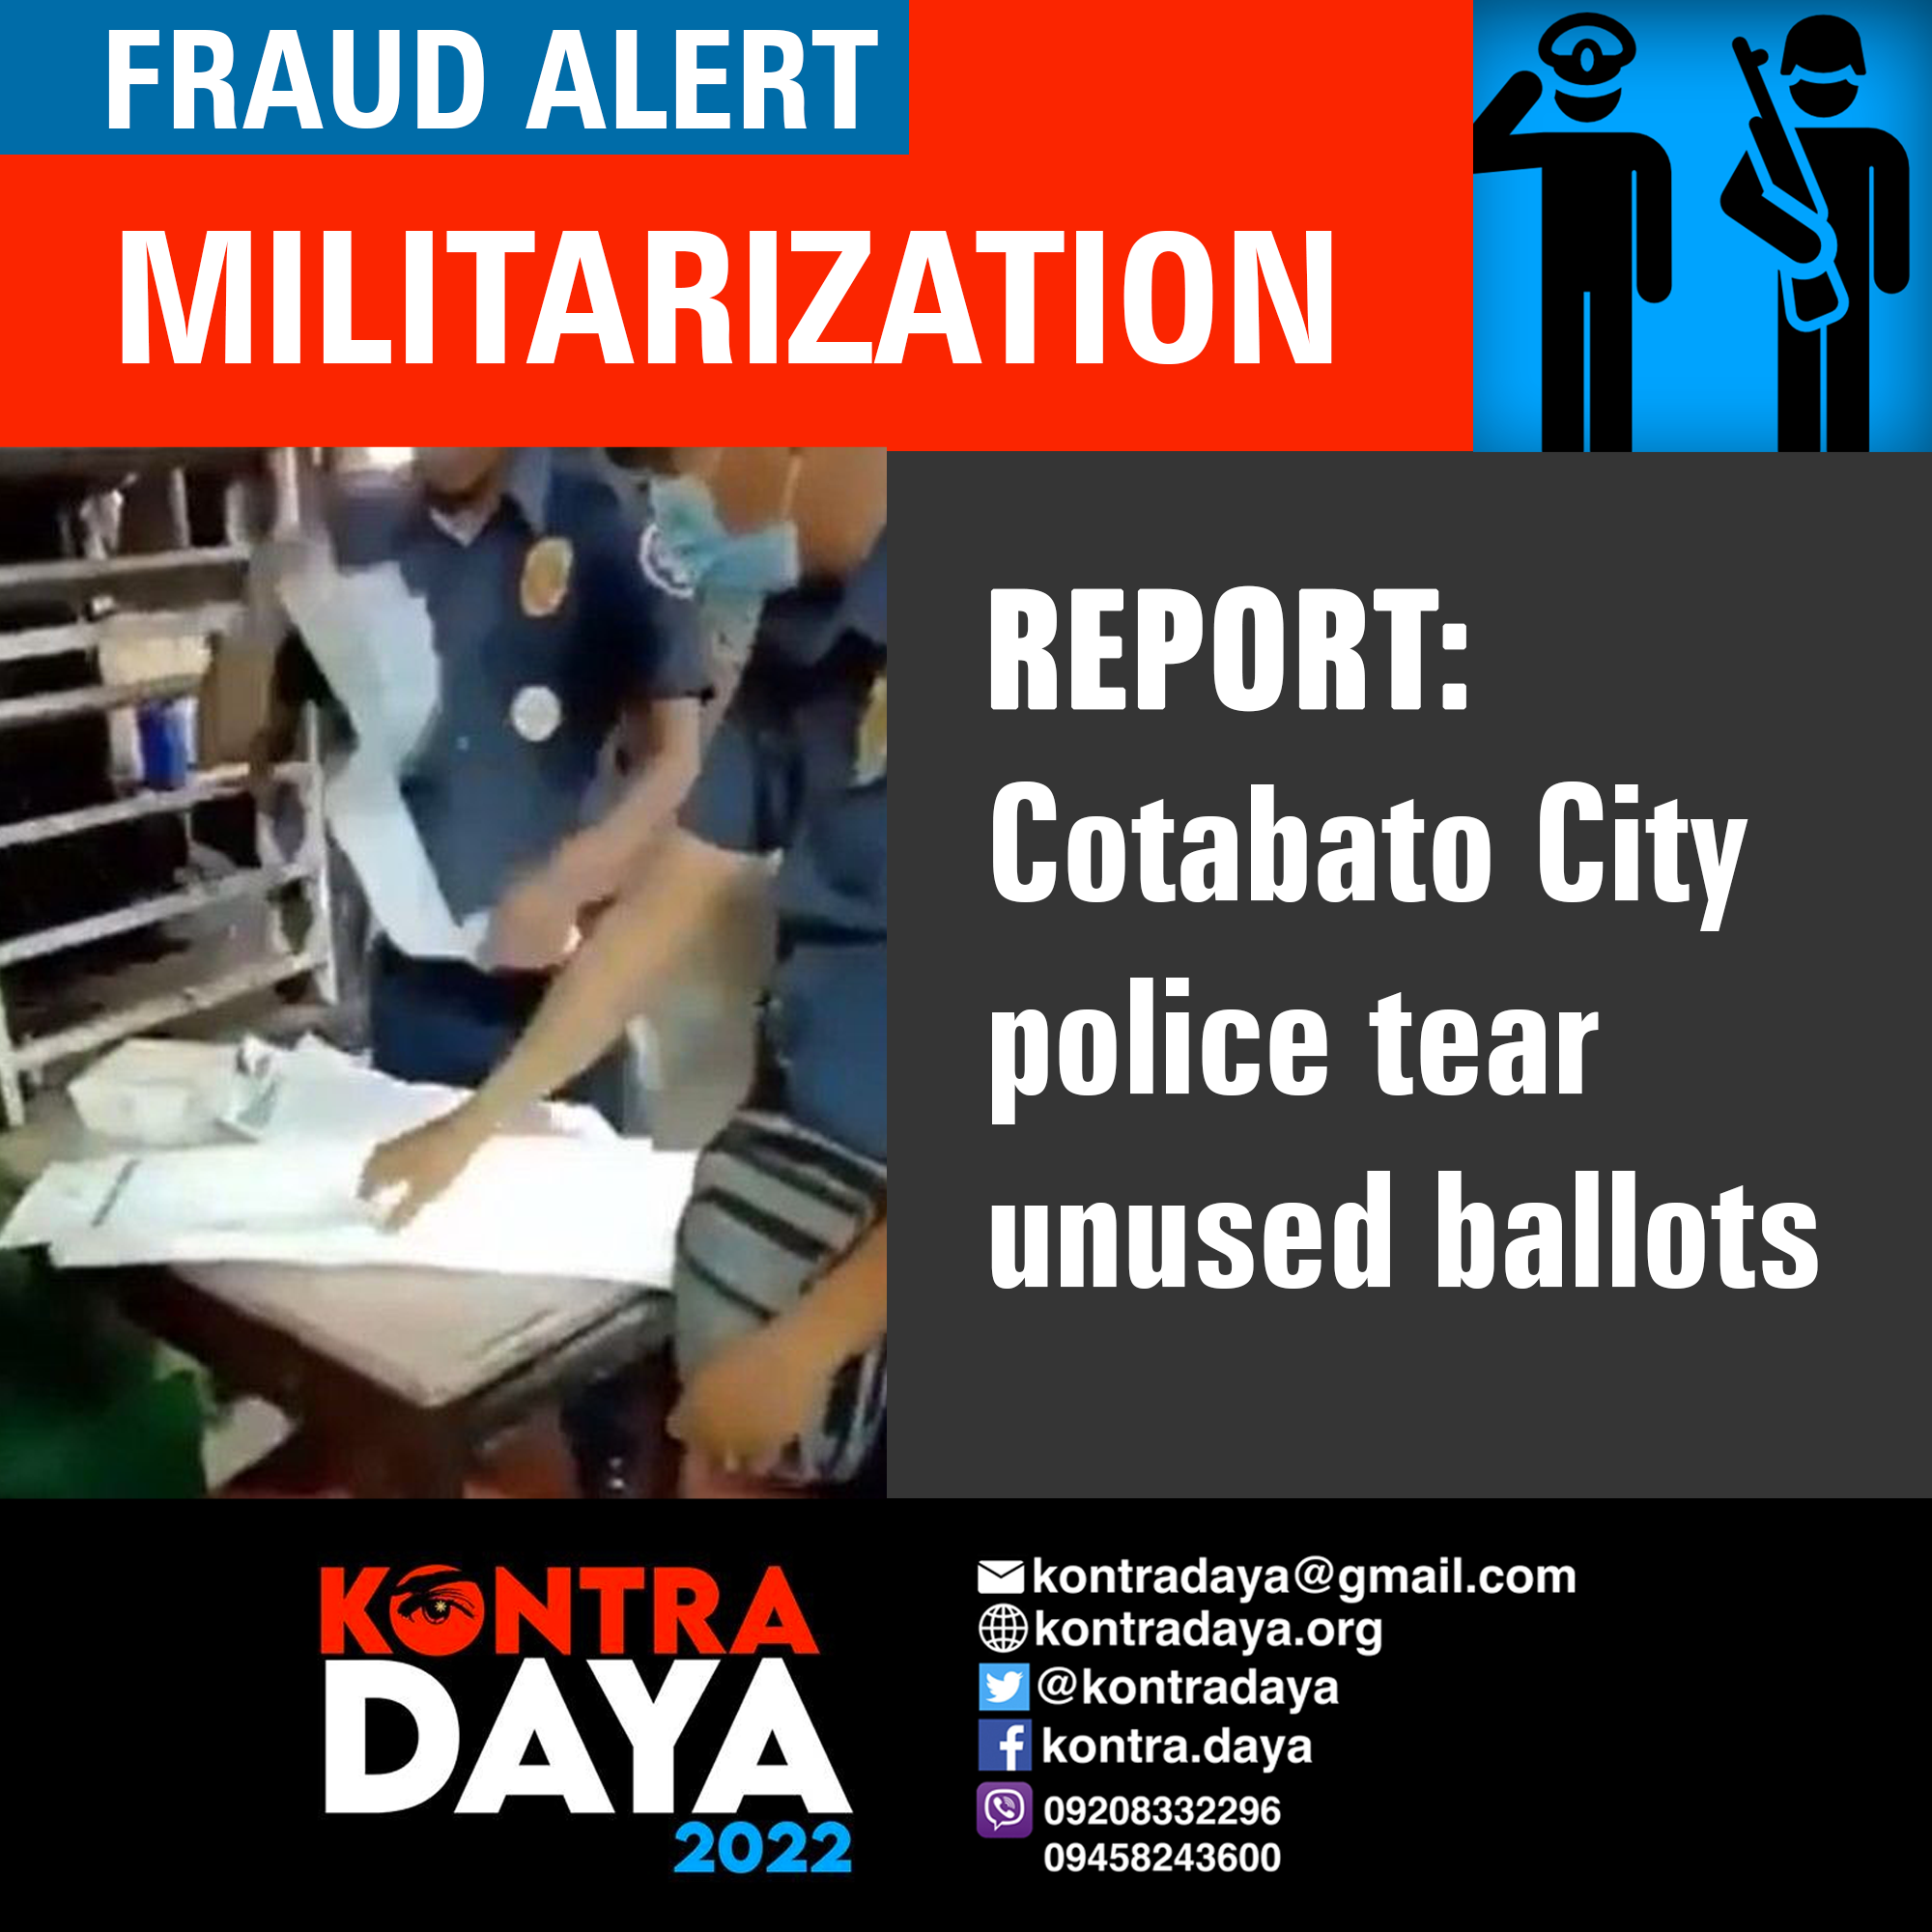 REPORT: Cotabato City police tear unused ballots